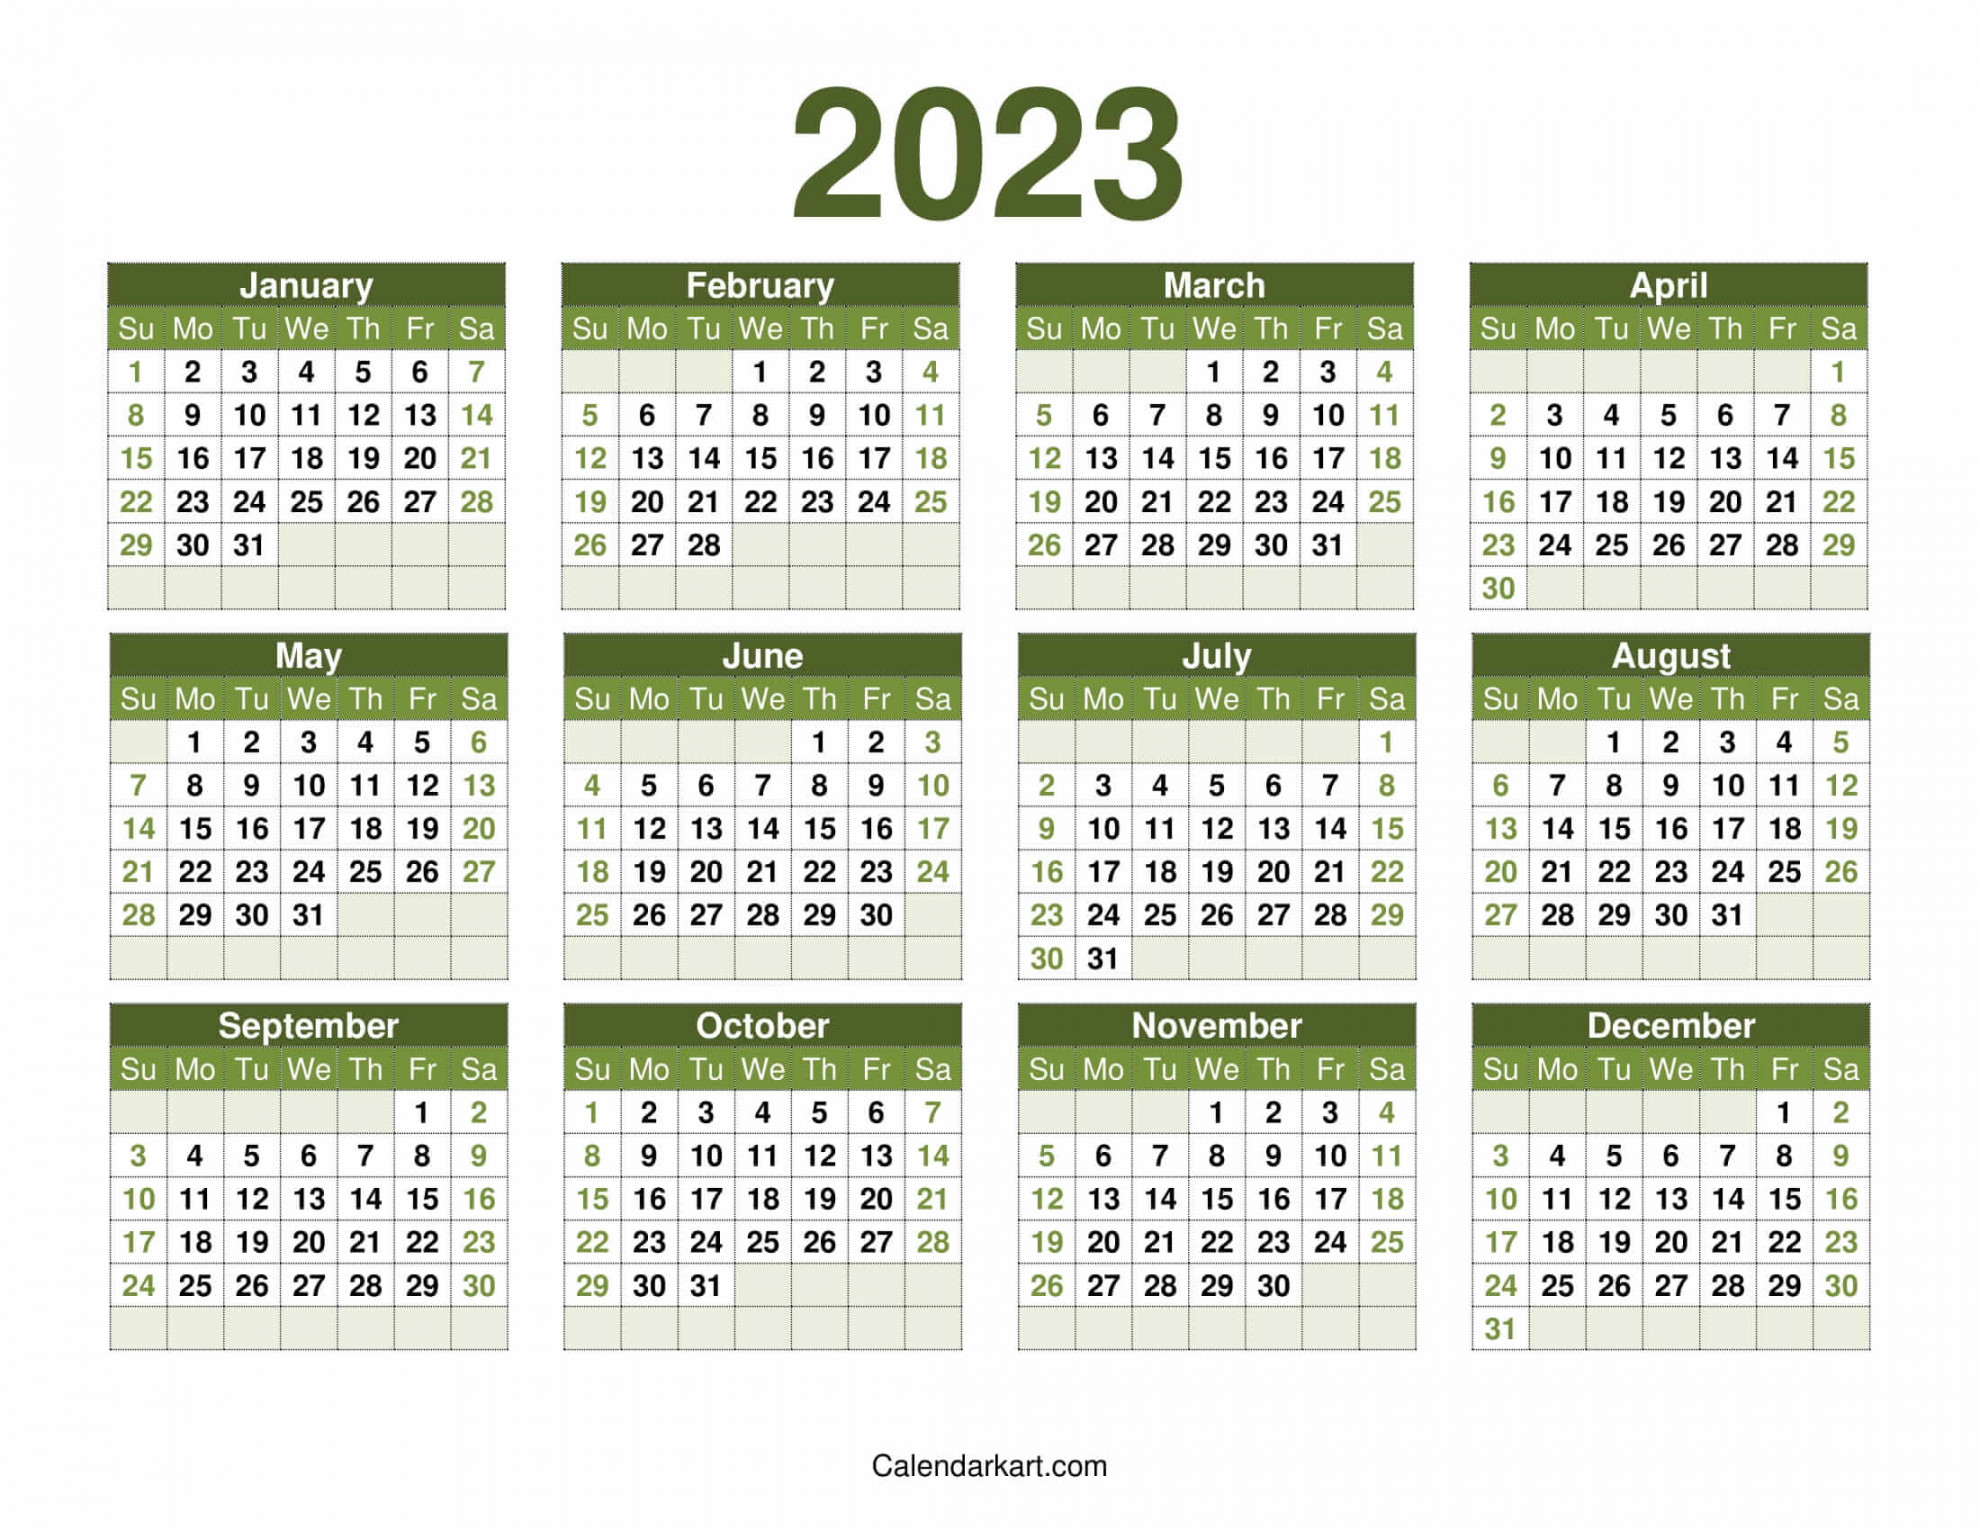 Free Printable Year At A Glance Calendar  - CalendarKart